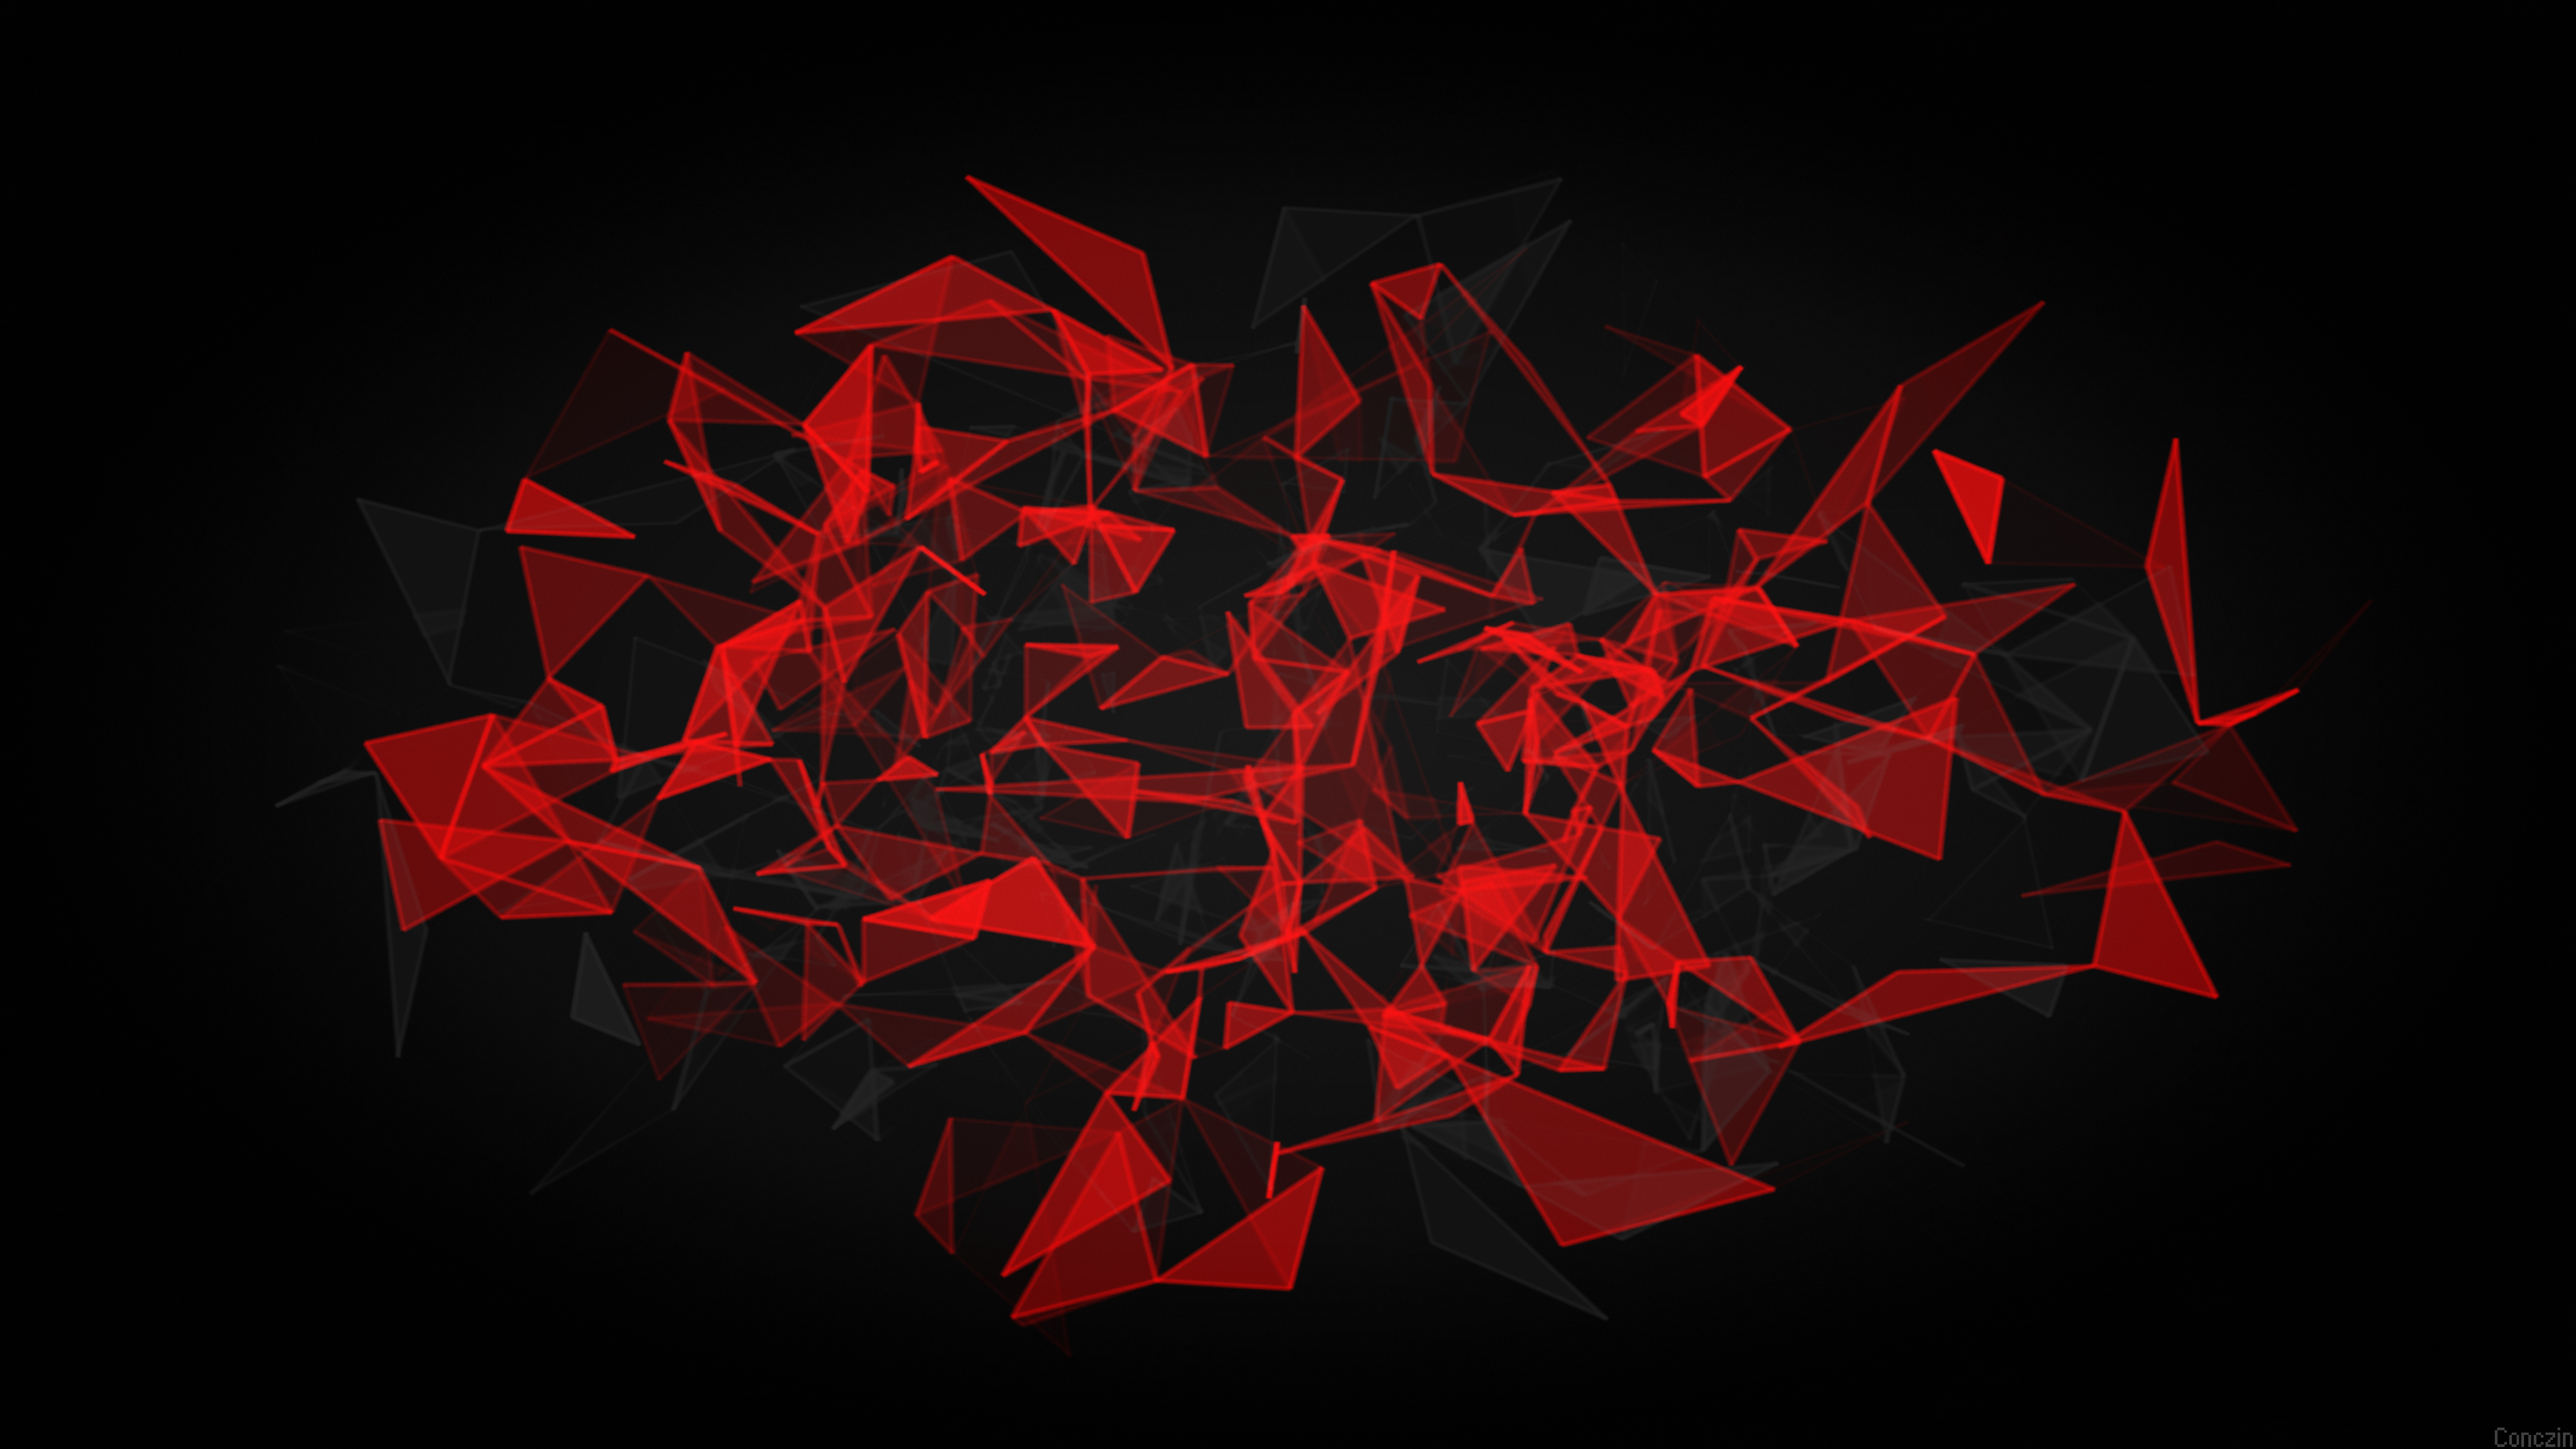 Red Polygons by Luke100000